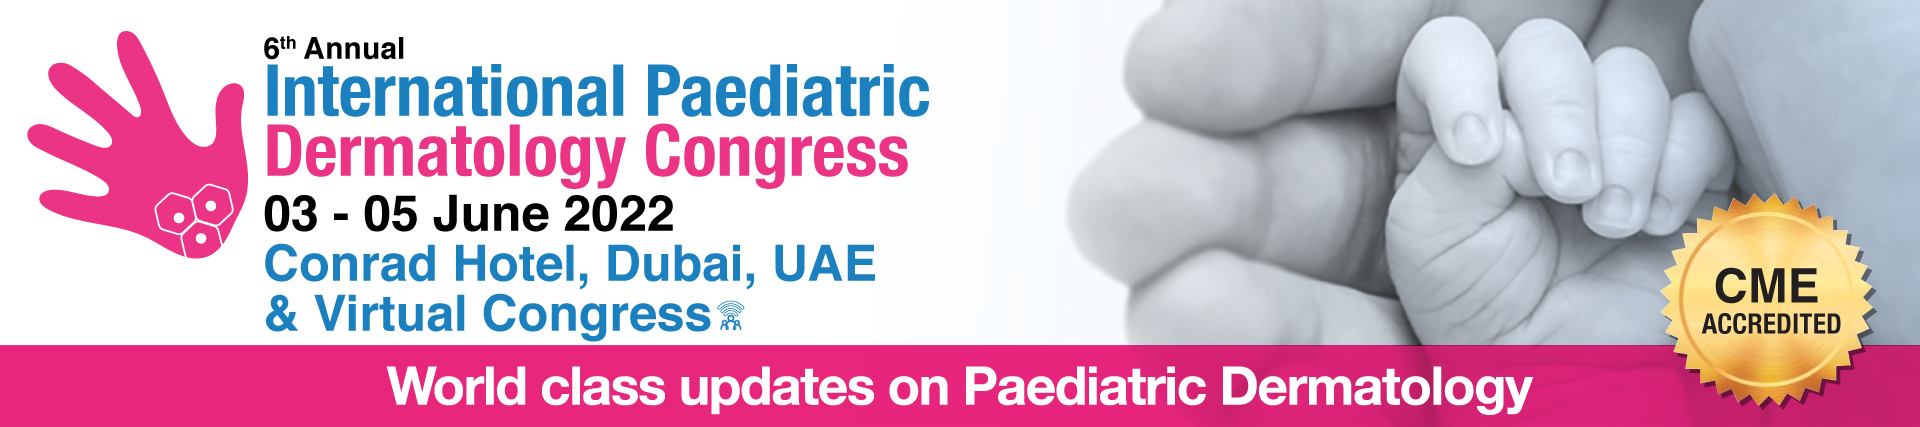 International Paediatric Dermatology Congress, Dubai, United Arab Emirates